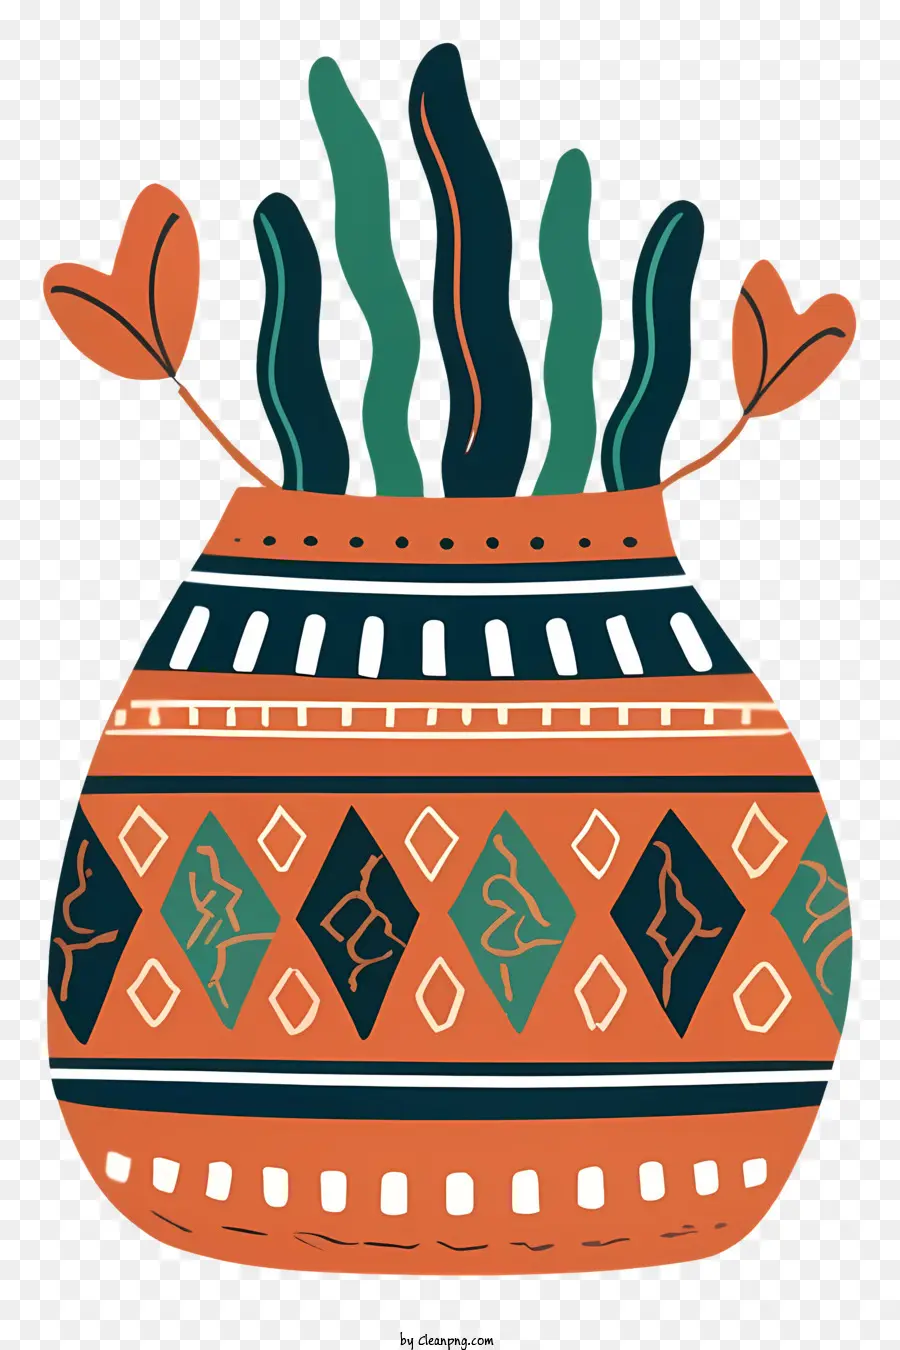 Cartoon Southwest Tribal Design Object Decorative Object Green and Orange Colors Bright and Bold - Vaso audace e colorato per camere in stile sud-ovest